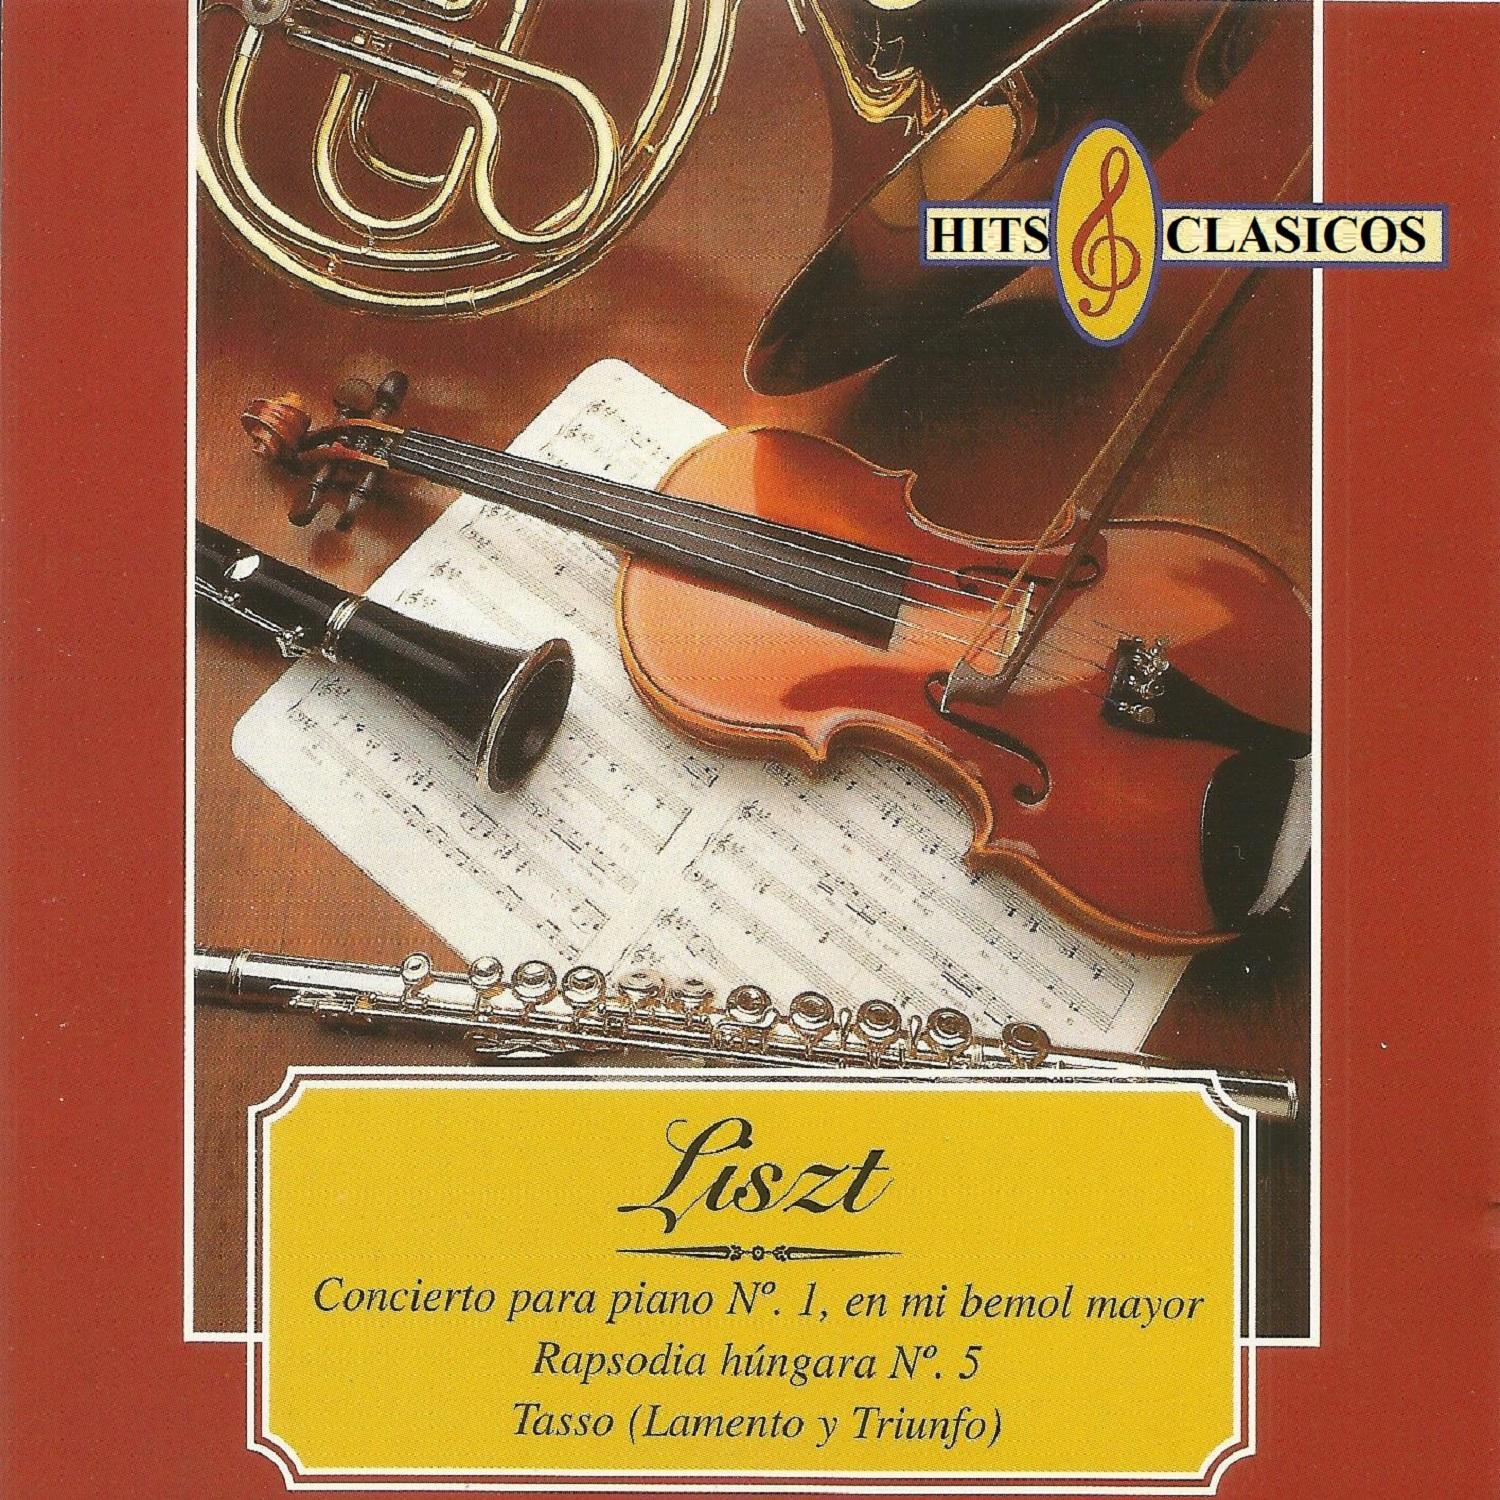 Hits Clasicos - Liszt专辑